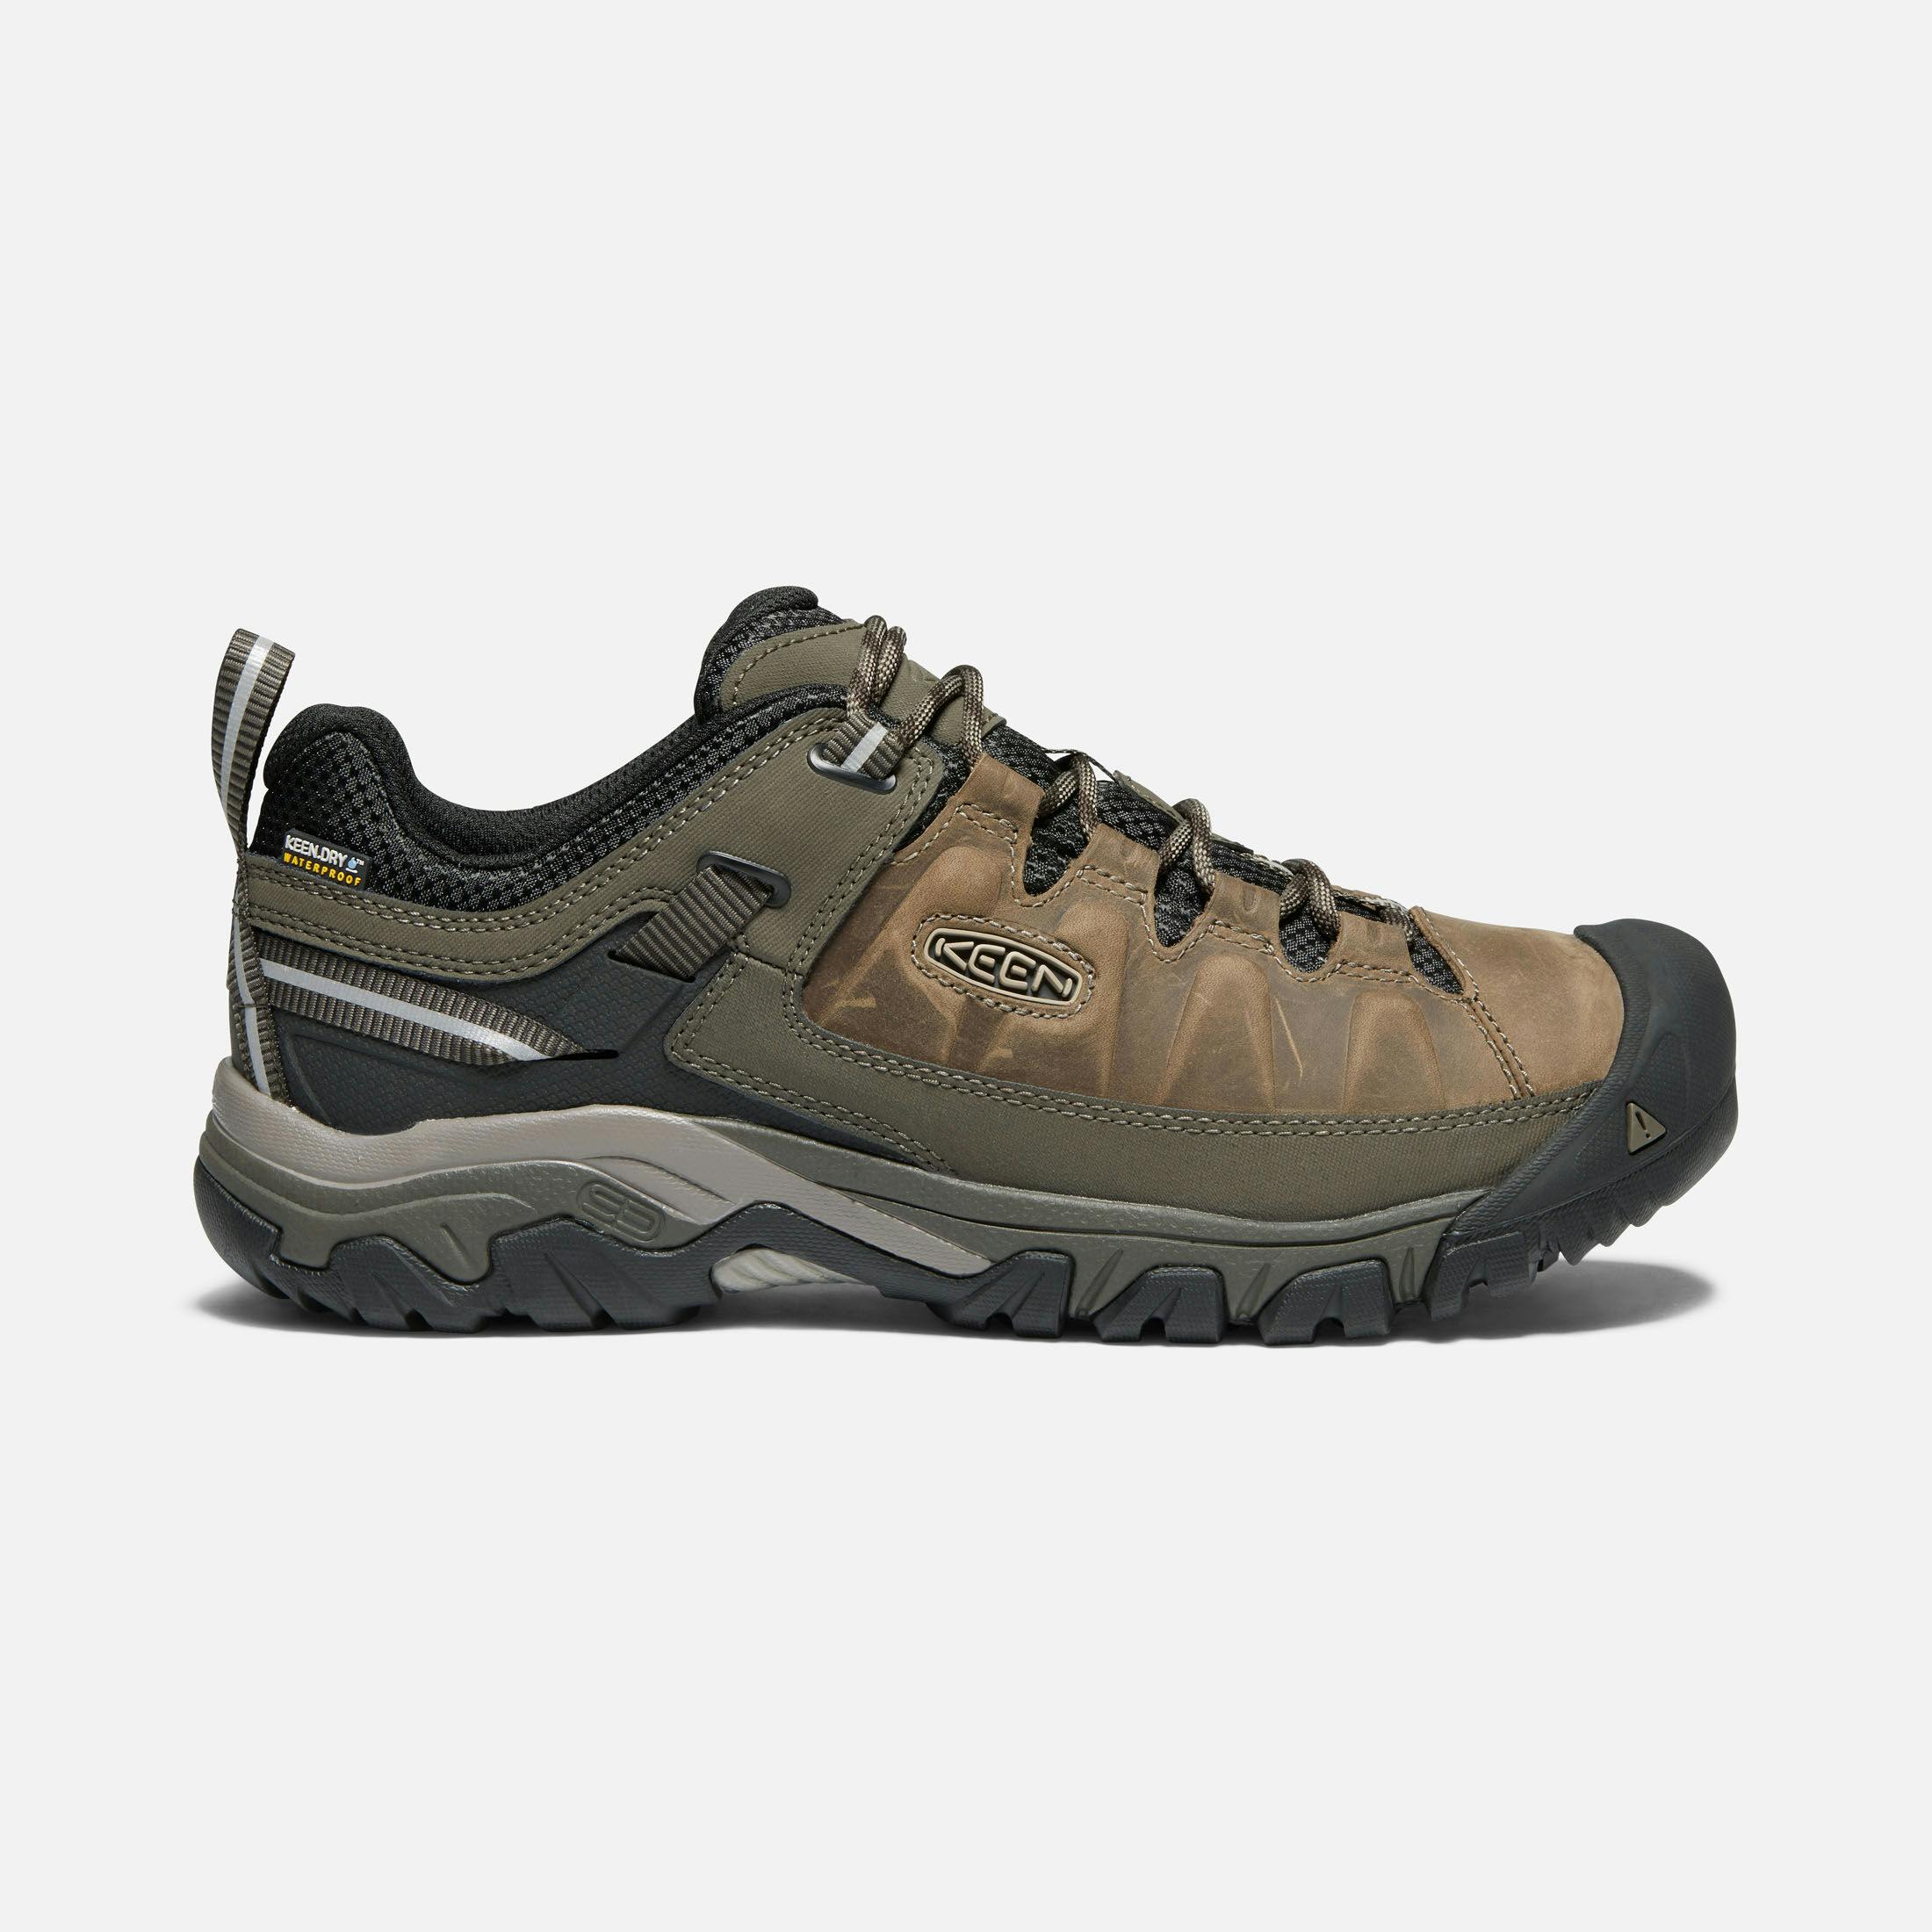 KEEN Men's Targhee III Waterproof Hiking Shoes